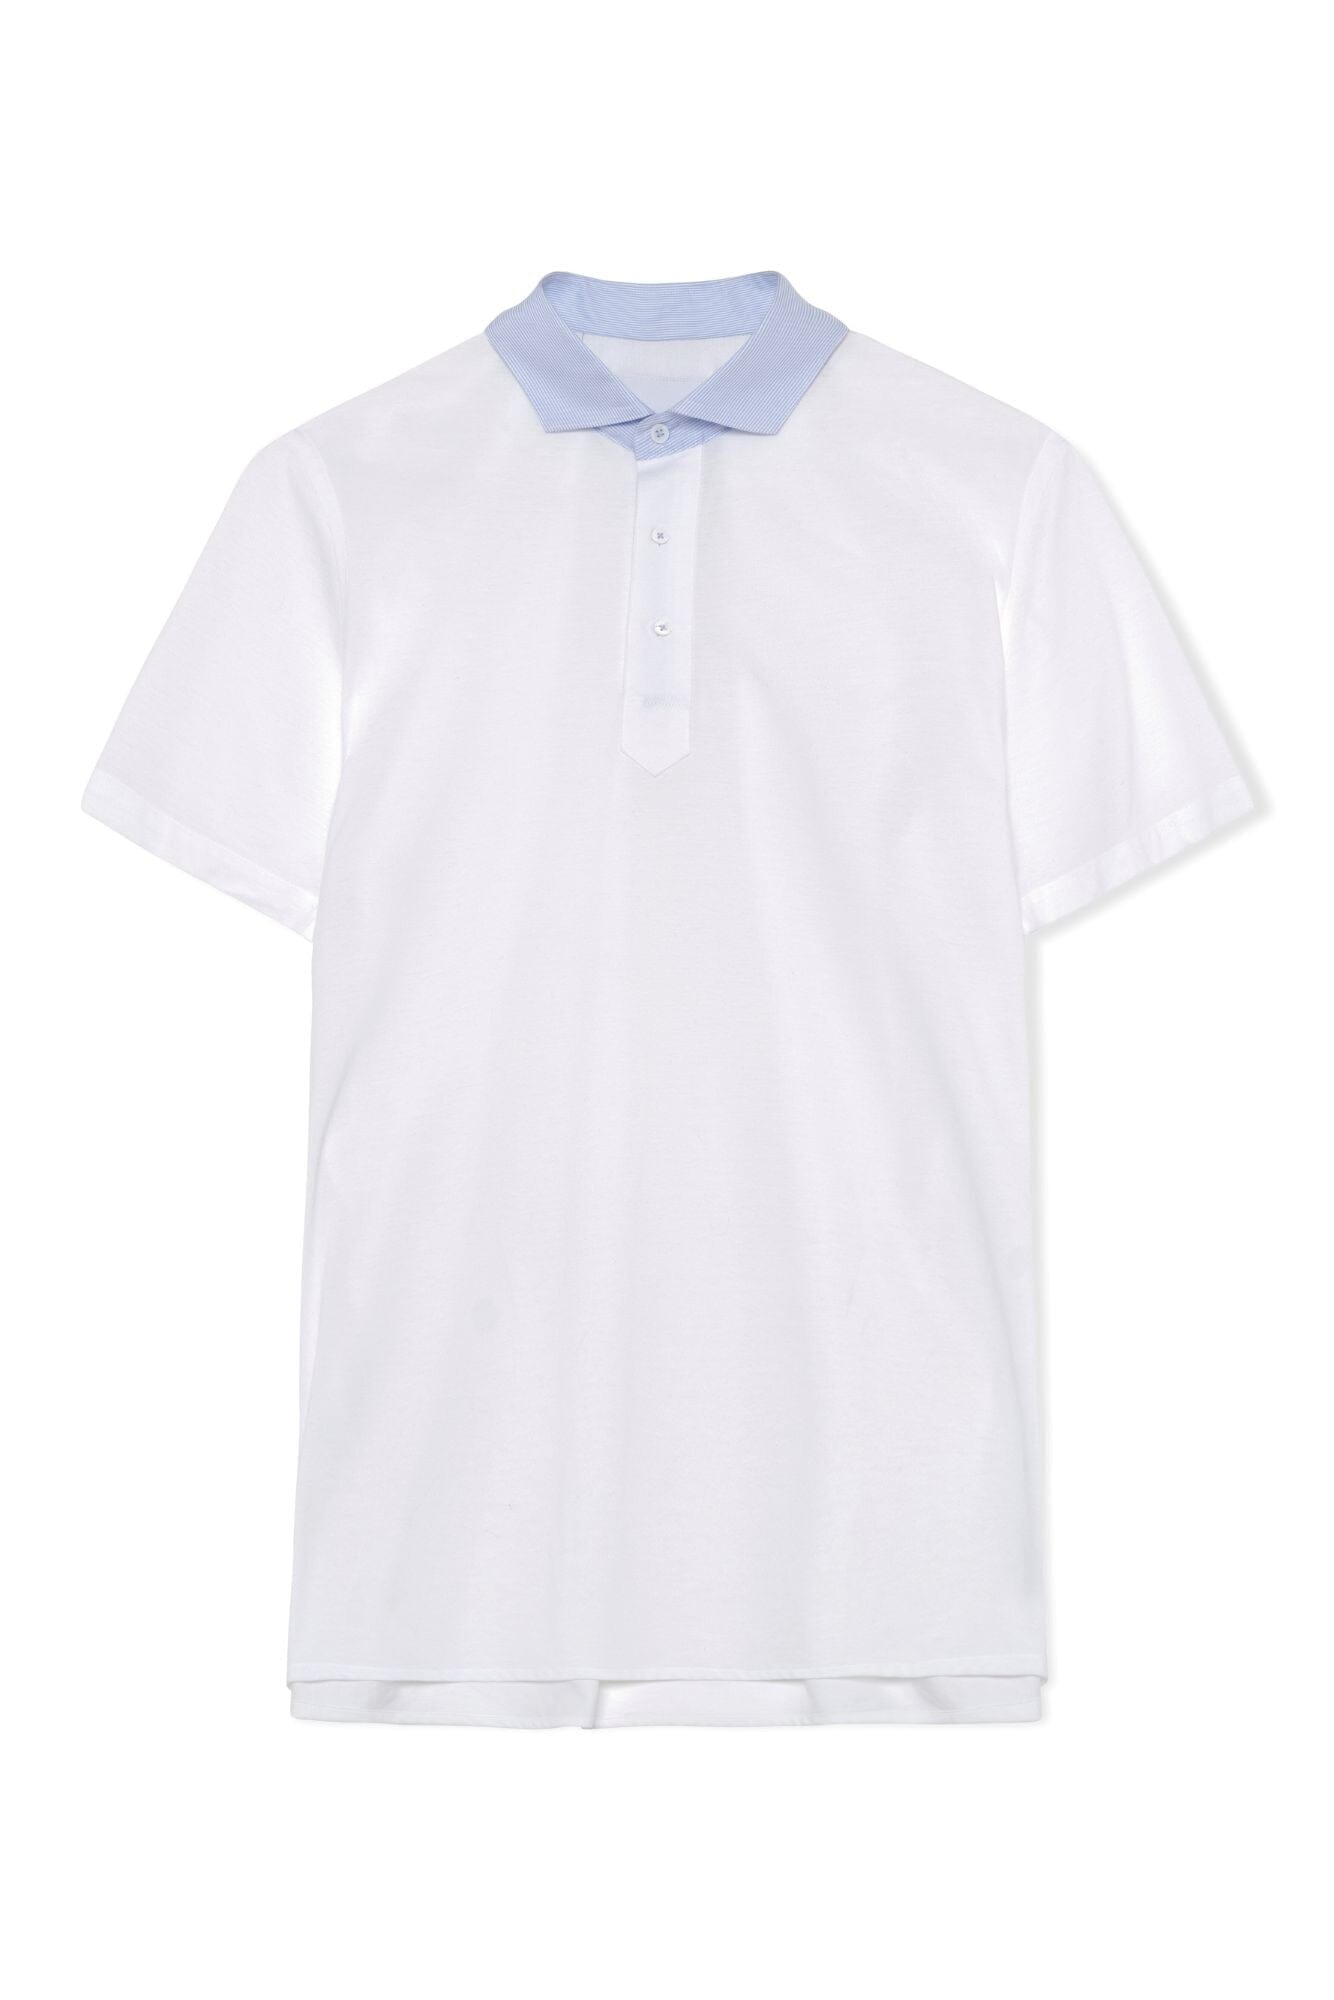 CGC Polo Shirt - White Pique with Mini Stripe Contrast